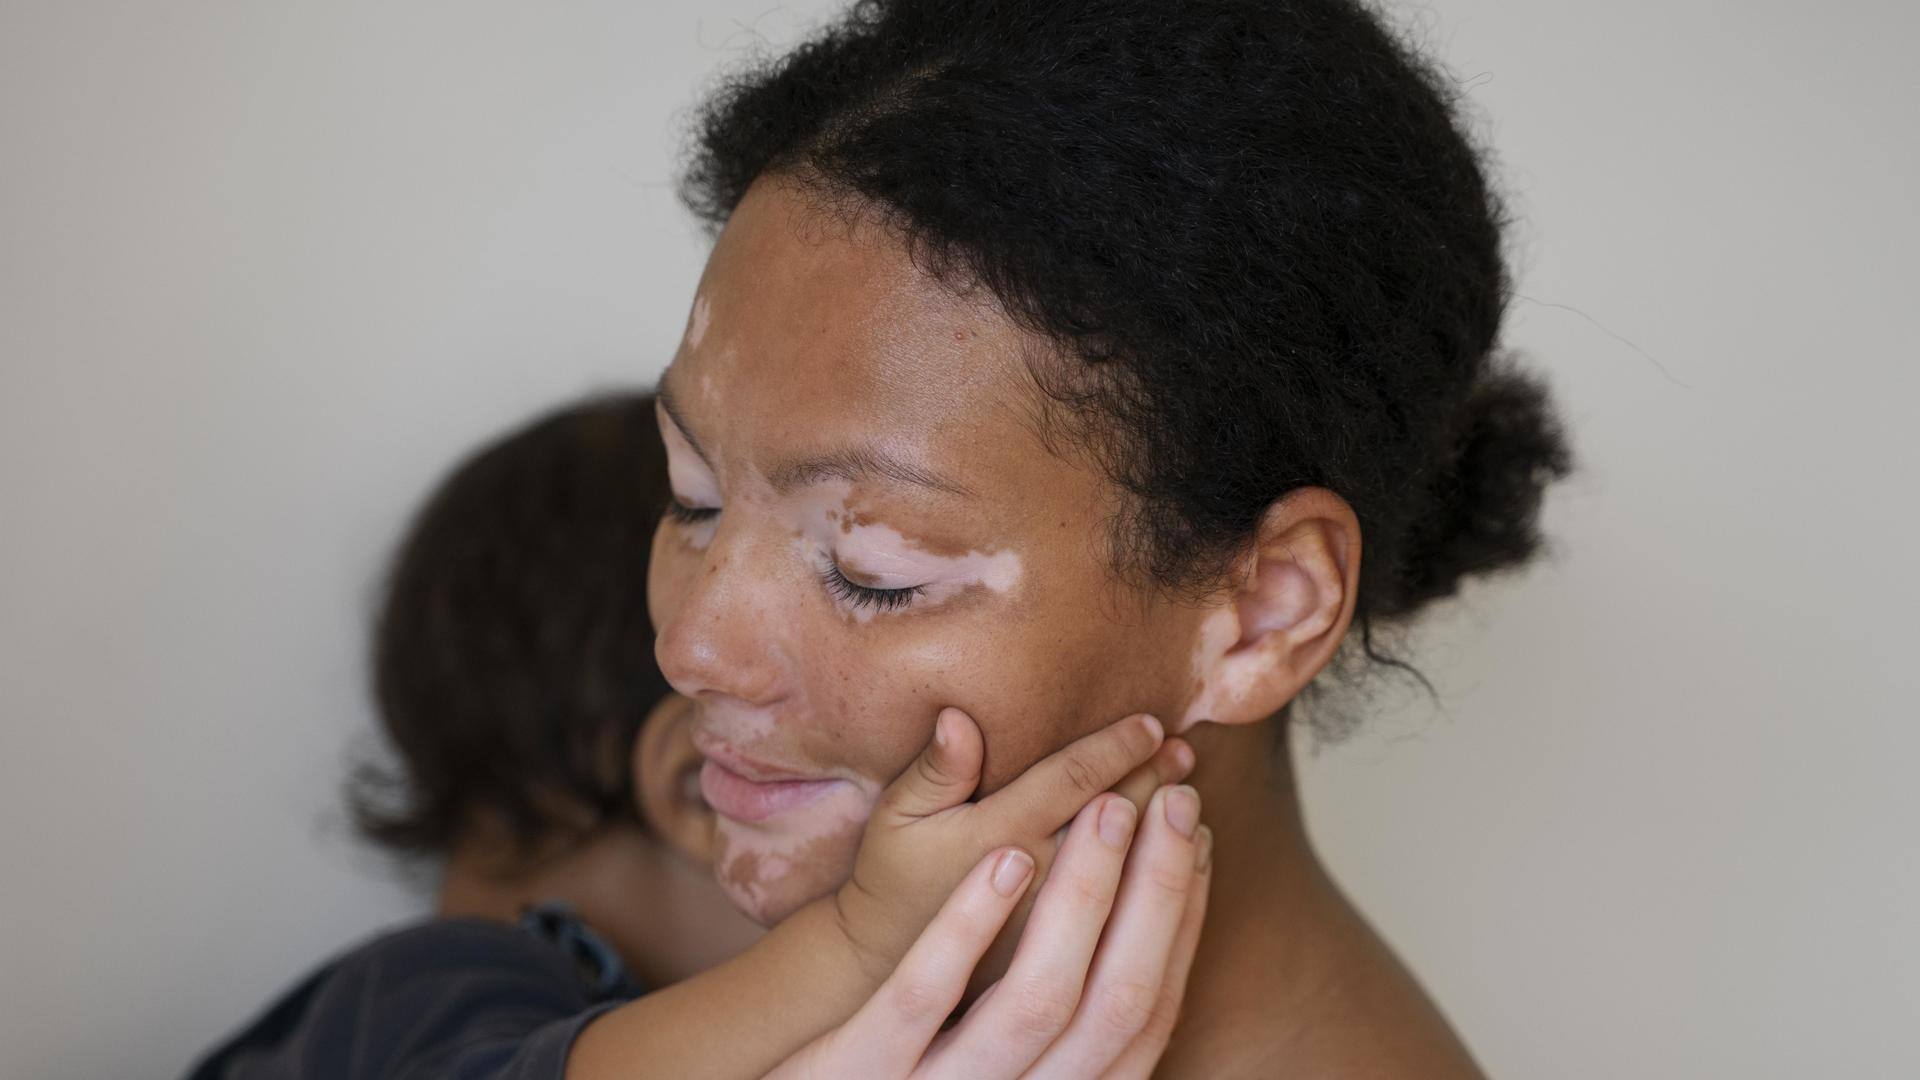 Busting myths about vitiligo